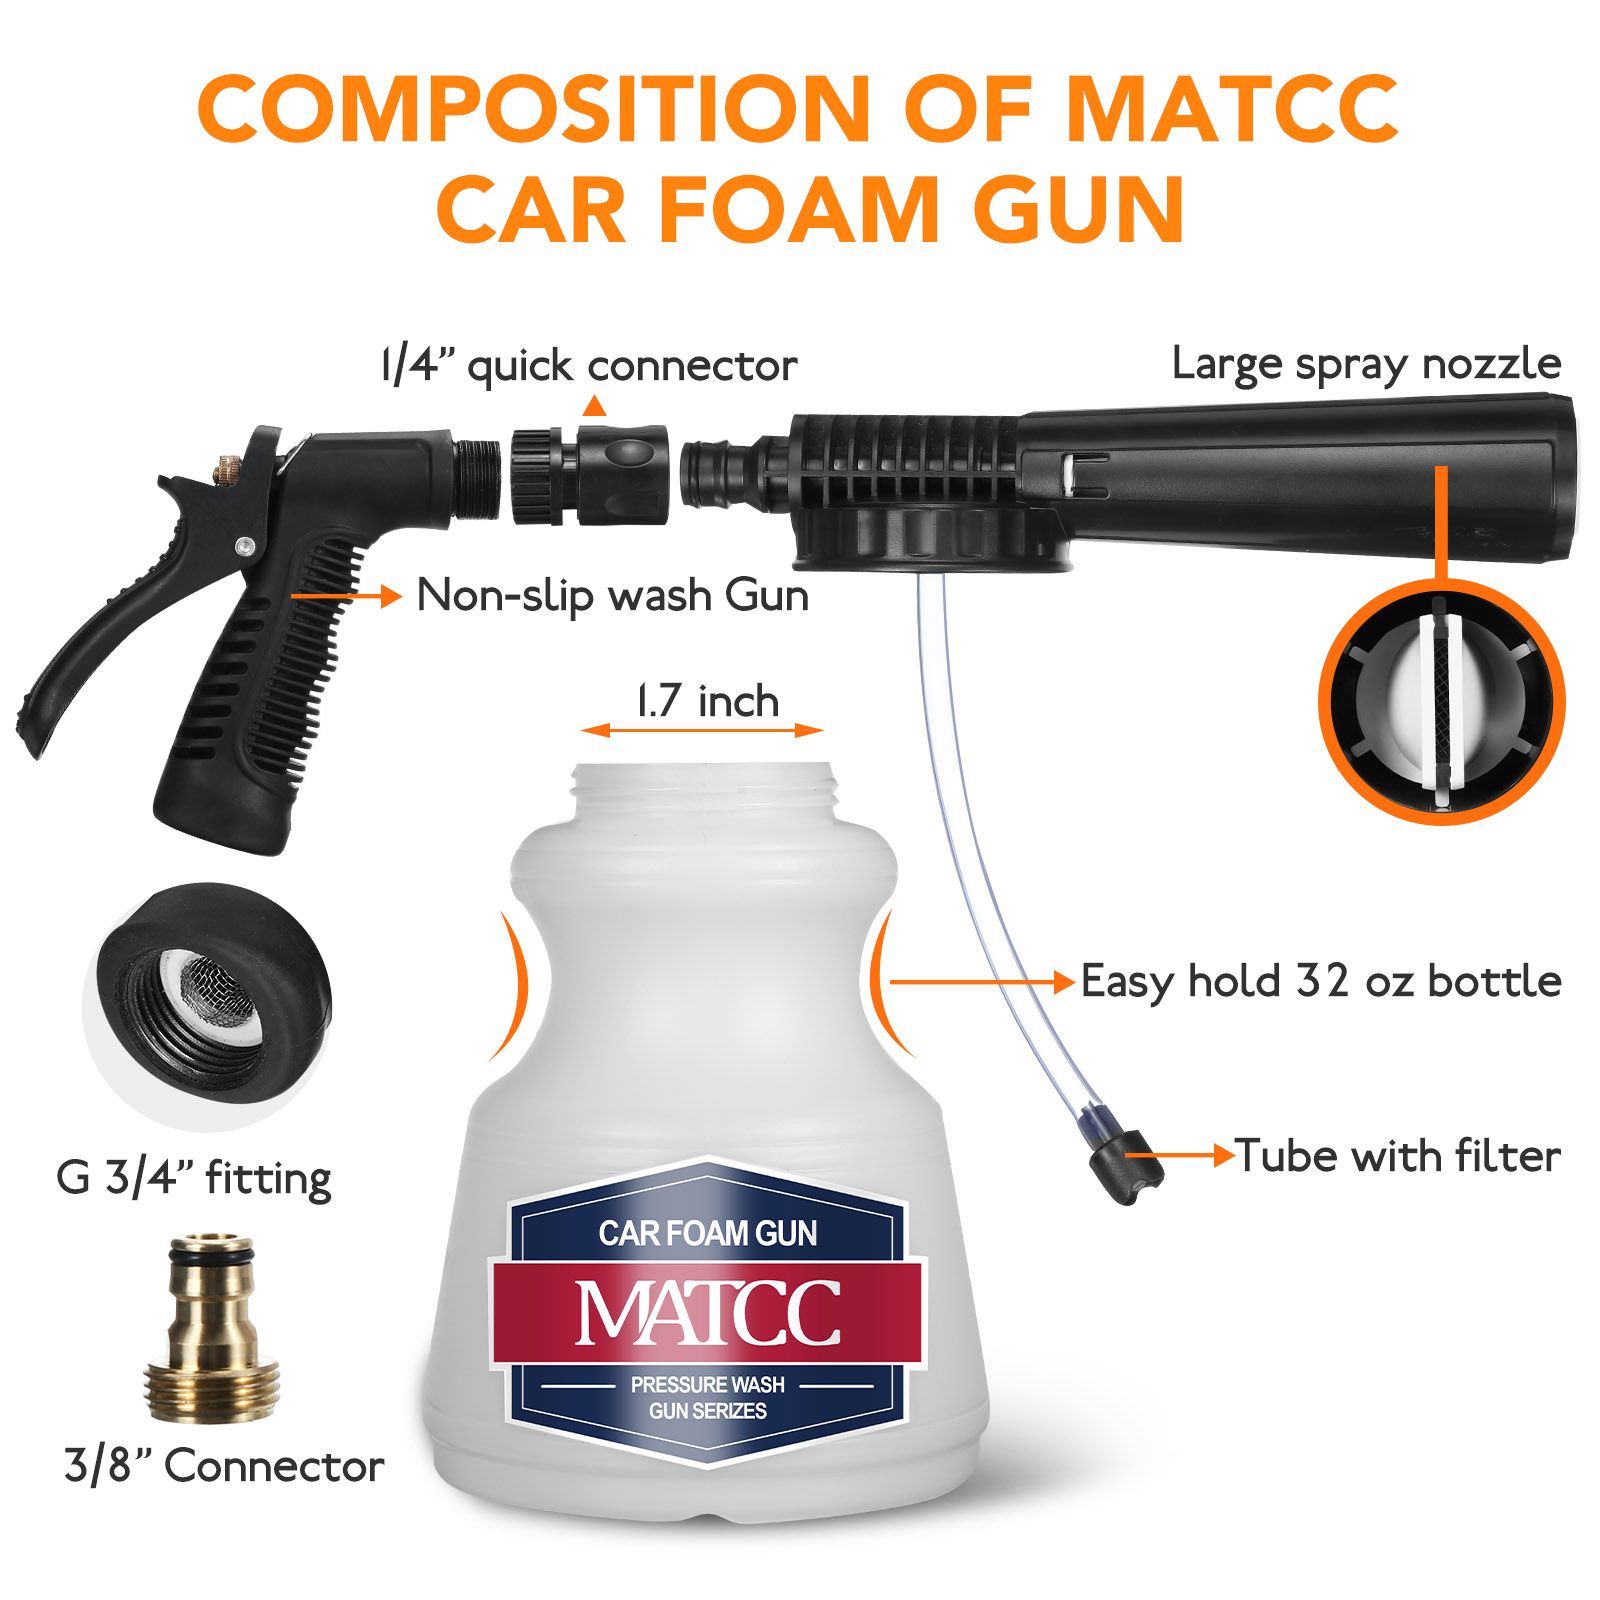 MATCC-Car-Wash-Foam-Guun-Snow-Foam-Blasster-Car-Foam-Canoon-Sprayer-for-Car-Home-Cleaning-and-Garden-1878121-4